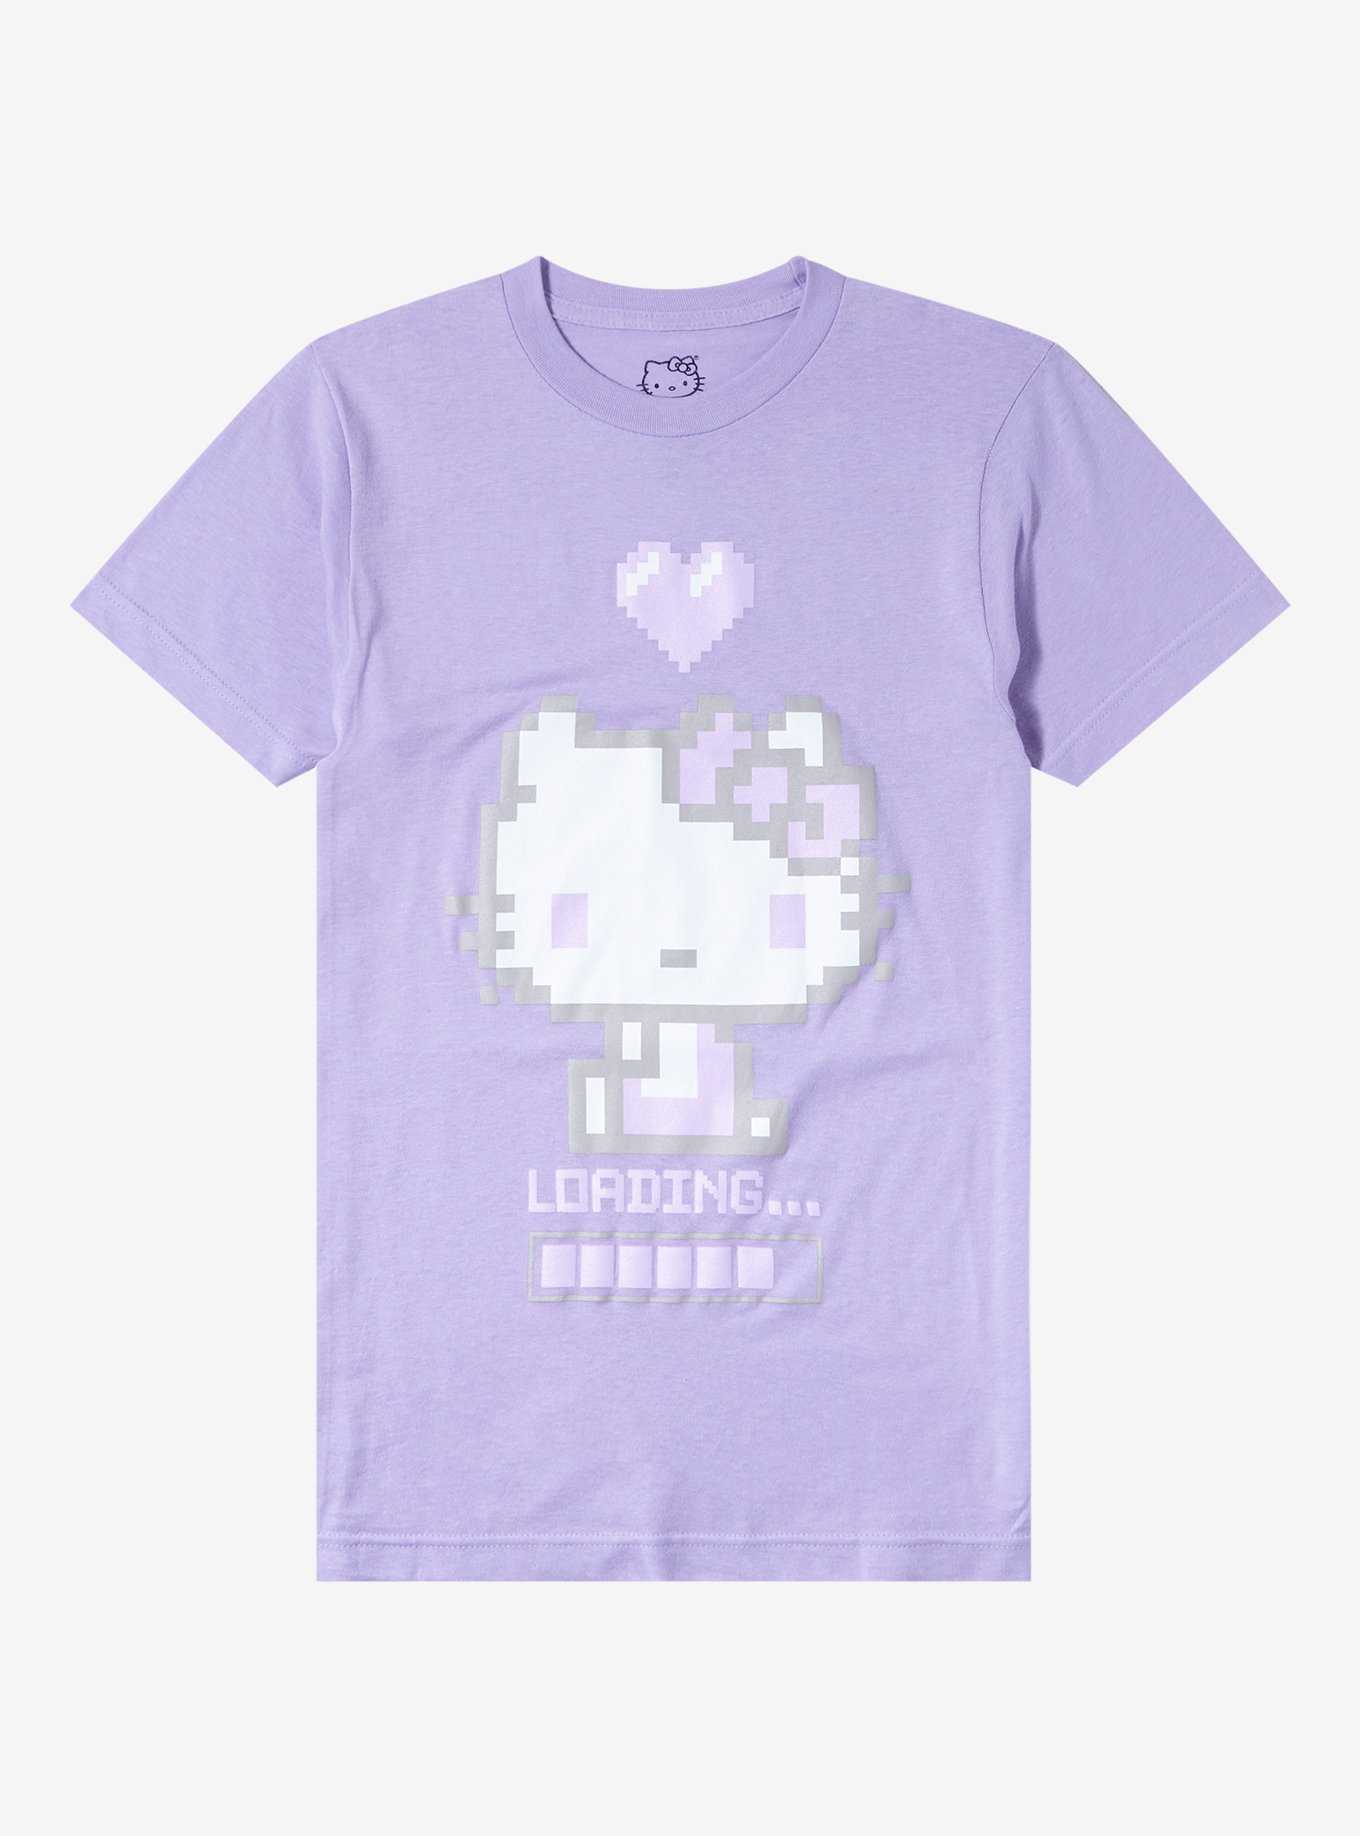 Hello Kitty Pixel Lavender Boyfriend Fit Girls T-Shirt, , hi-res